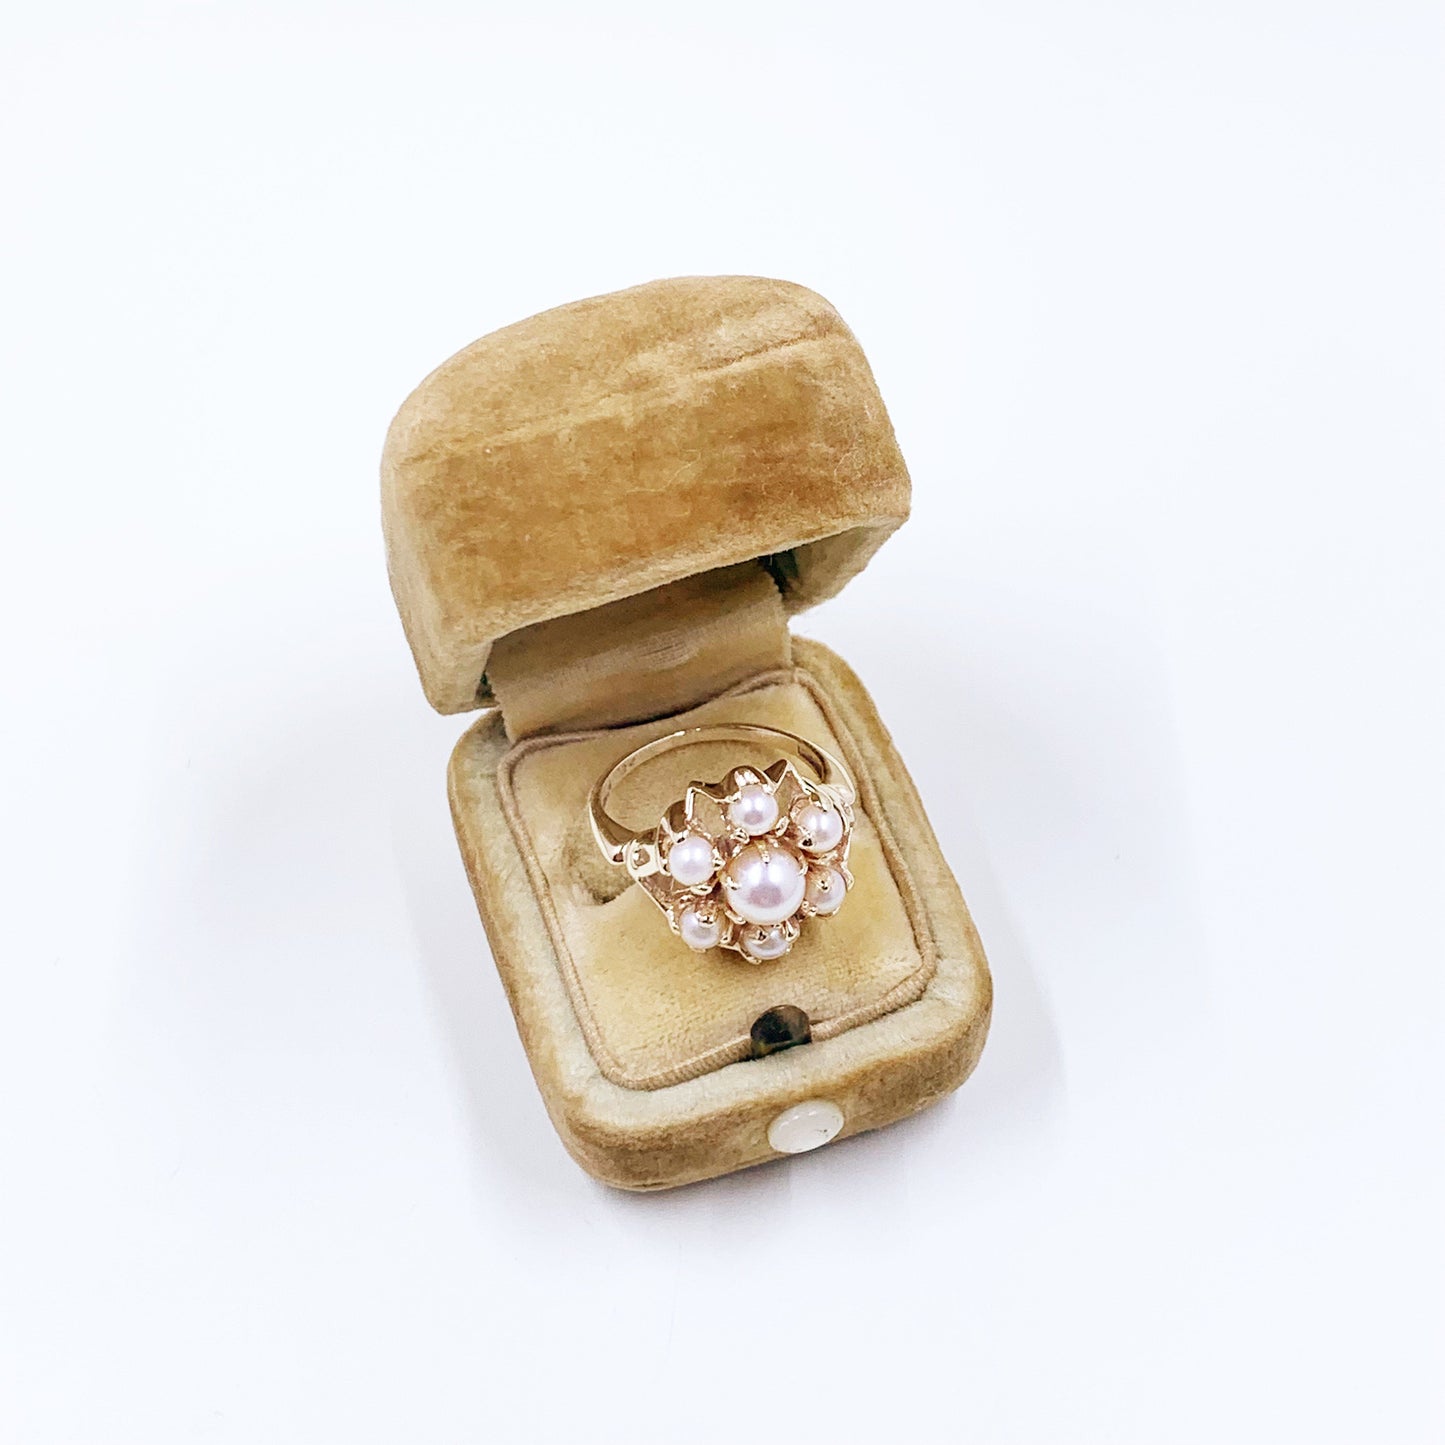 Vintage 10k Gold Pearl Cluster Ring | 10K Gold Pearl Flower Cluster Ring | Size 5 1/2 Ring